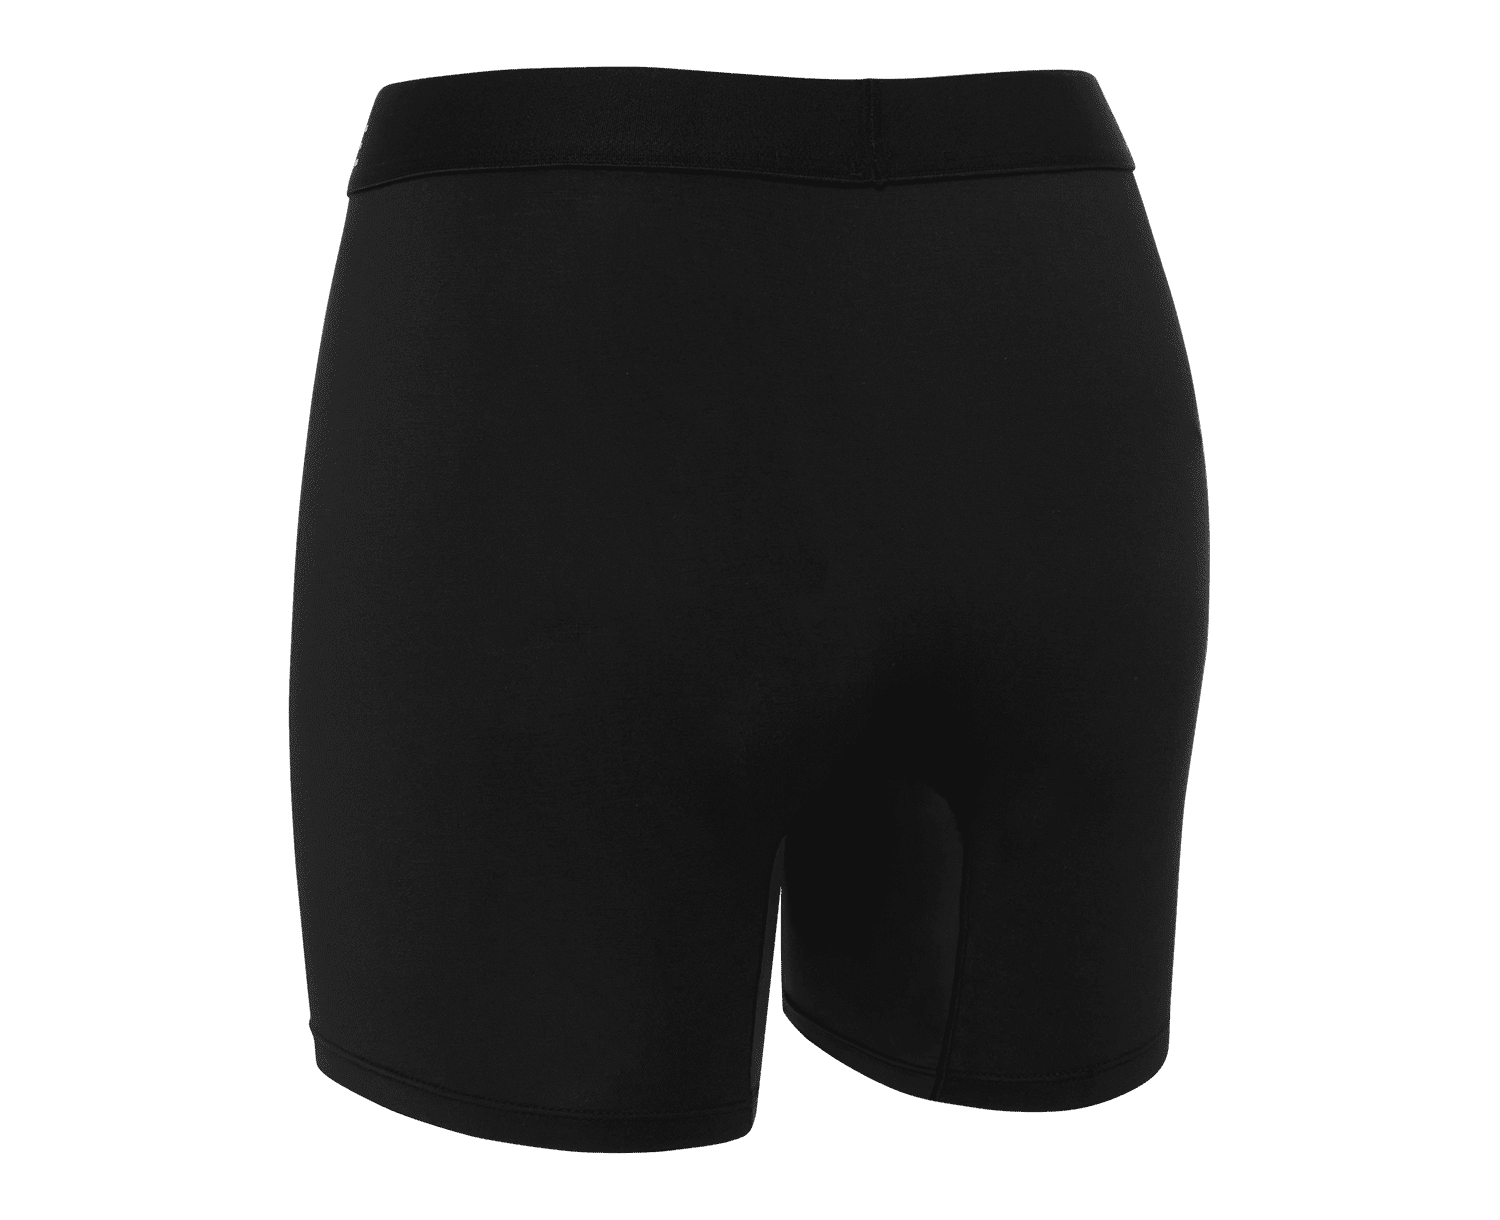 Women's Body Shorts - Blush